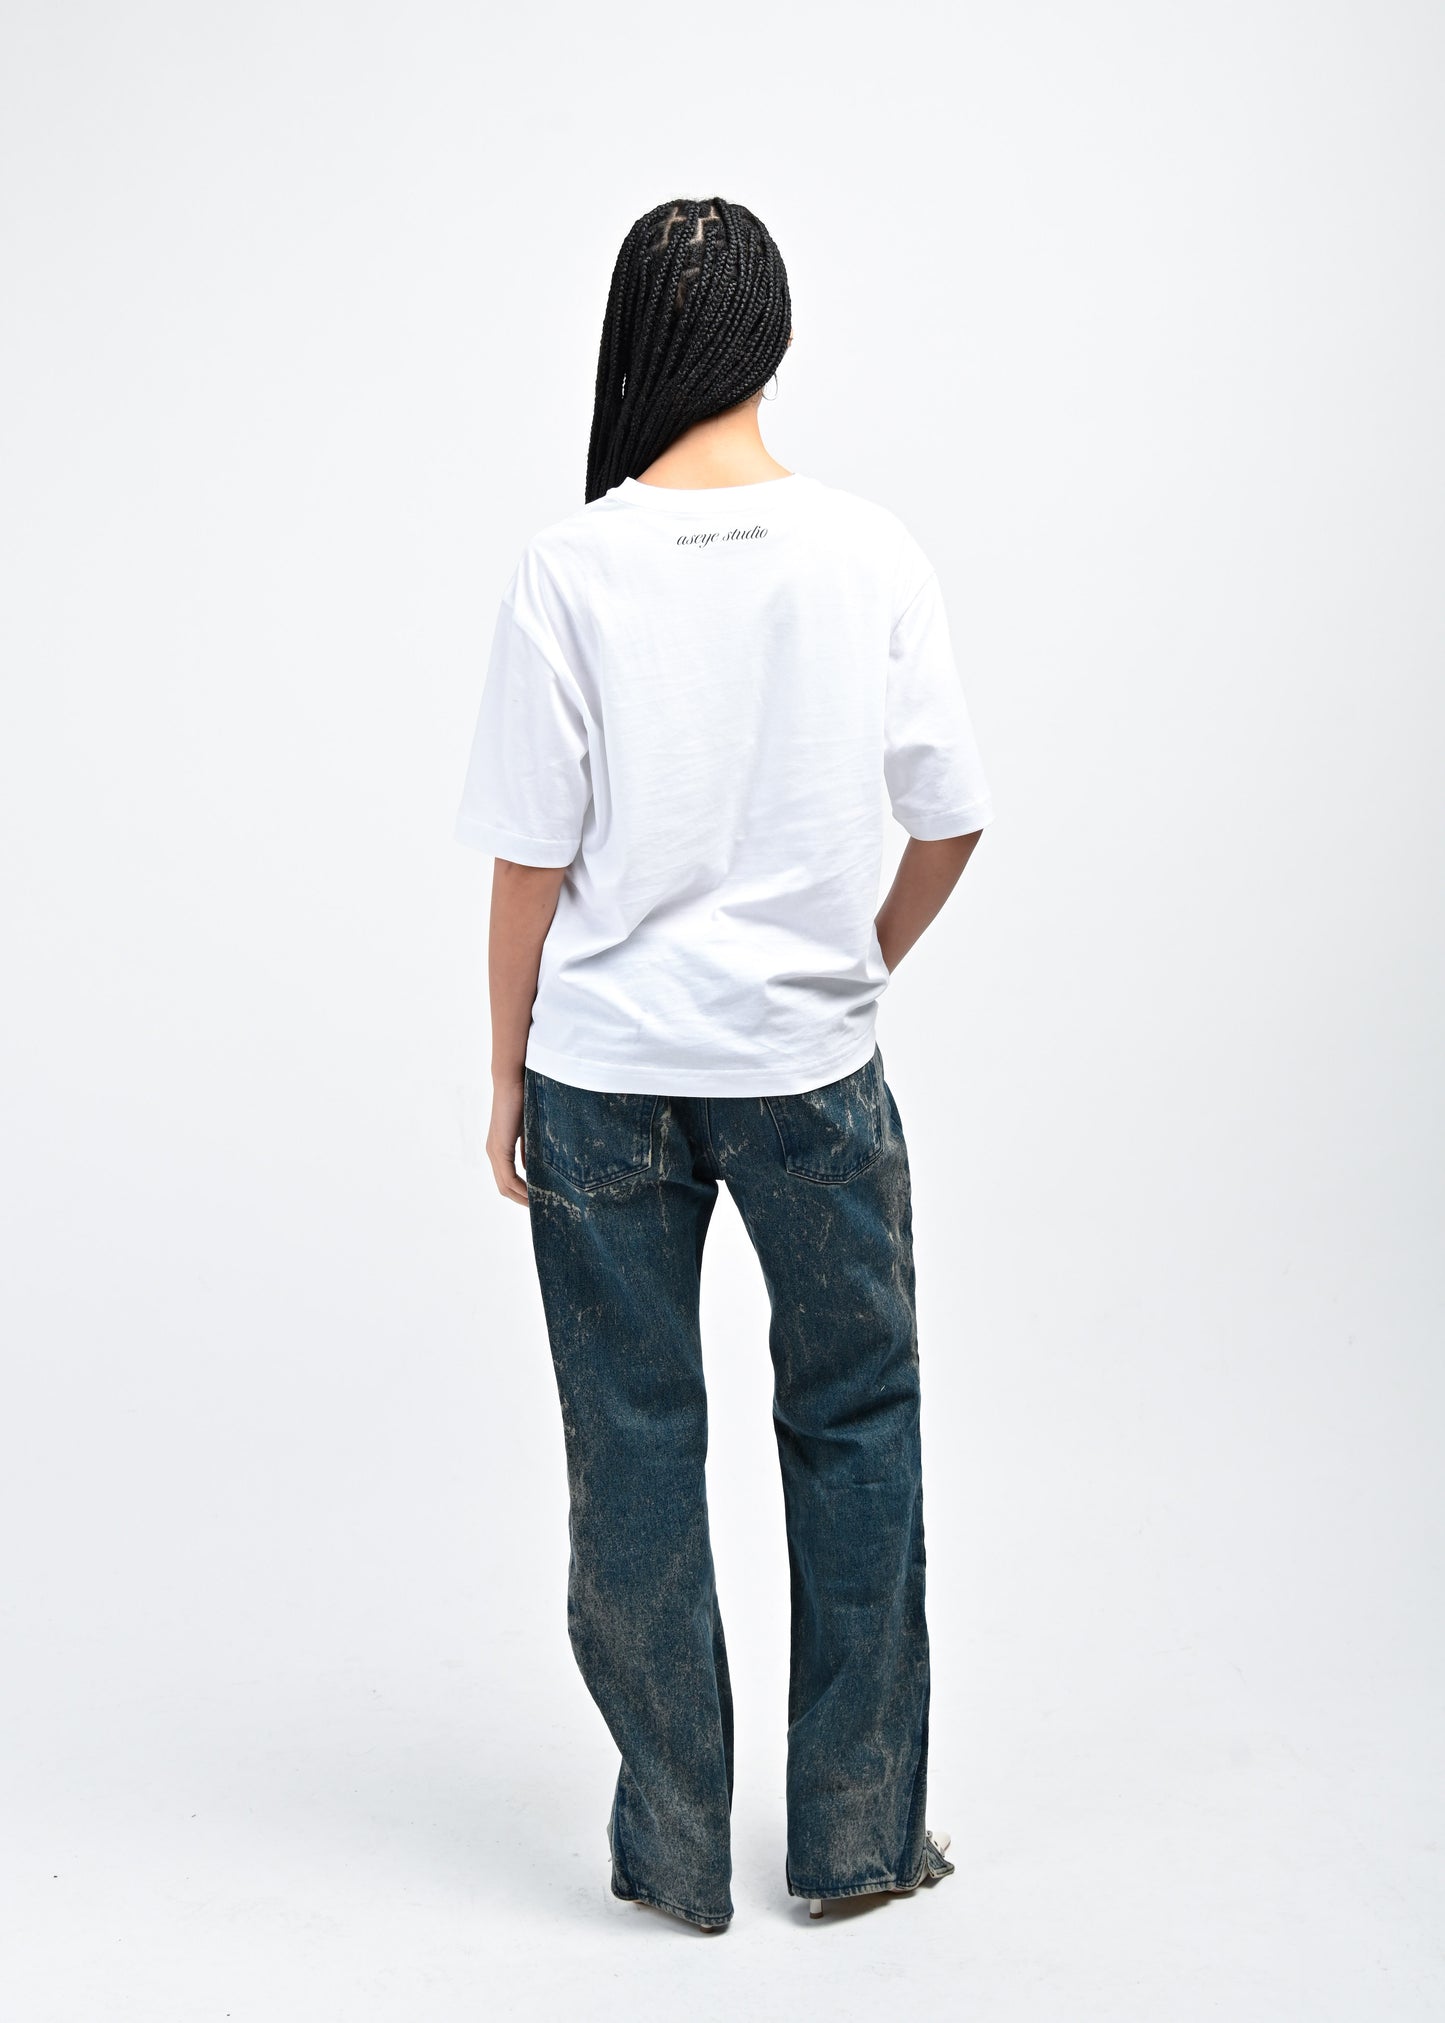 Back View of Model wearing Studio of Trailblazers T-shirt by Aseye Studio